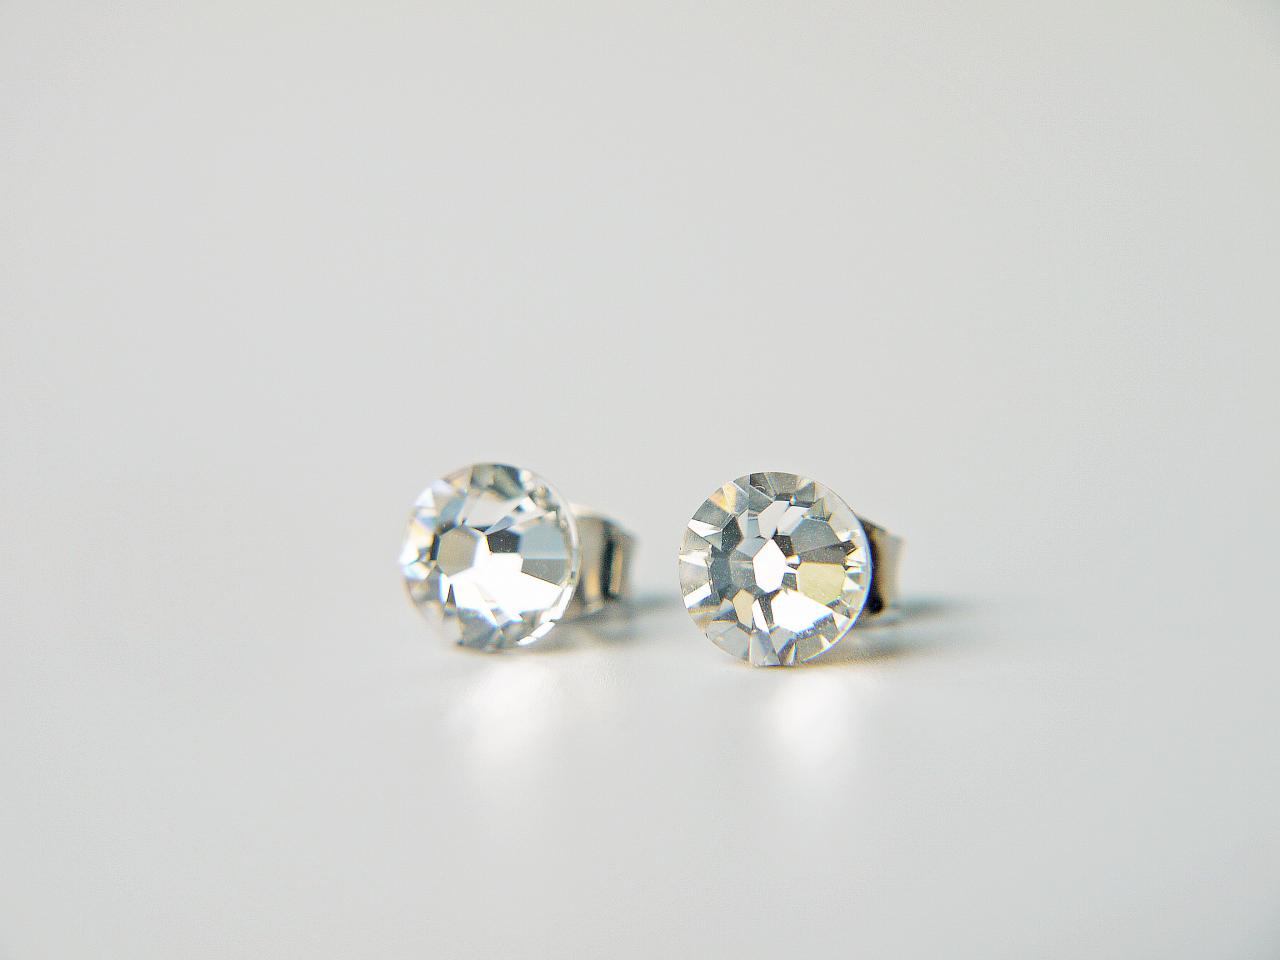 Simple Swarovski Crystal Titanium Earrings Sparkly Clear Crystal Dainty Everyday Earrings